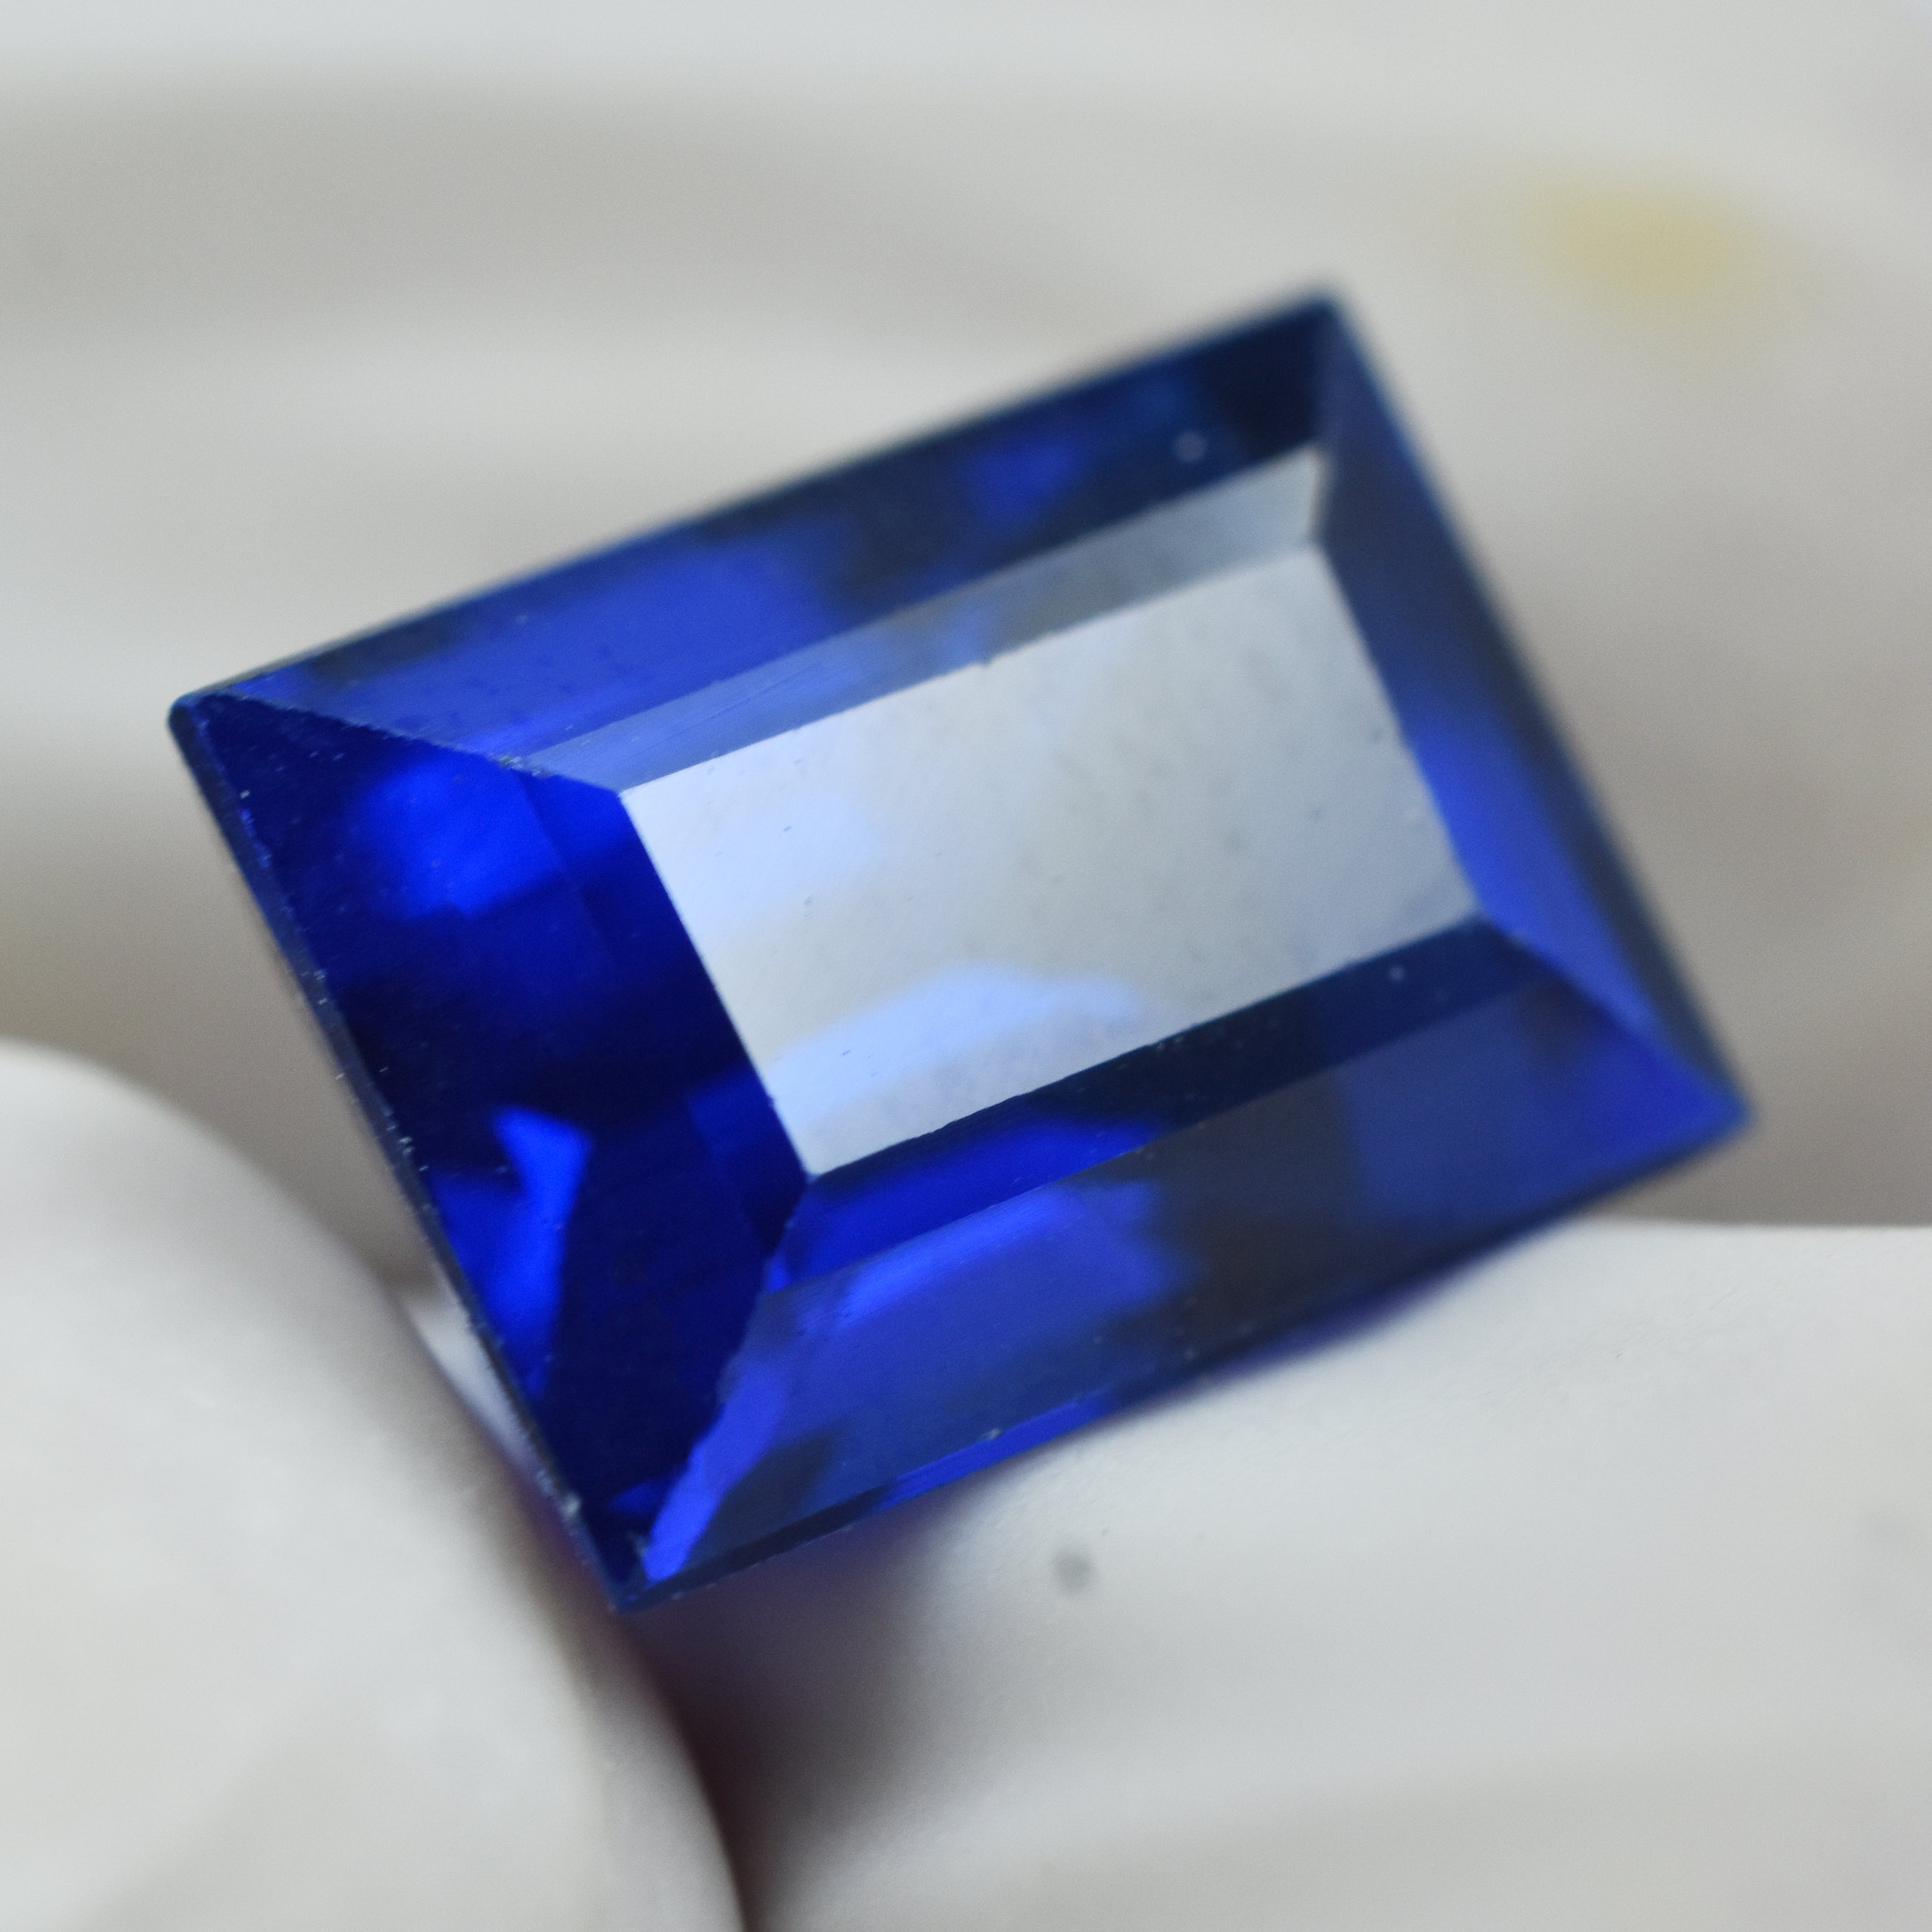 Certified Natural Blue Tanzanite 10.65 Carat Emerald Tanzanite Best For Good Luck Symbol Tanzania's Rare Tanzanite Loose Gemstone Jewelry Making Stone Use As A Gift..